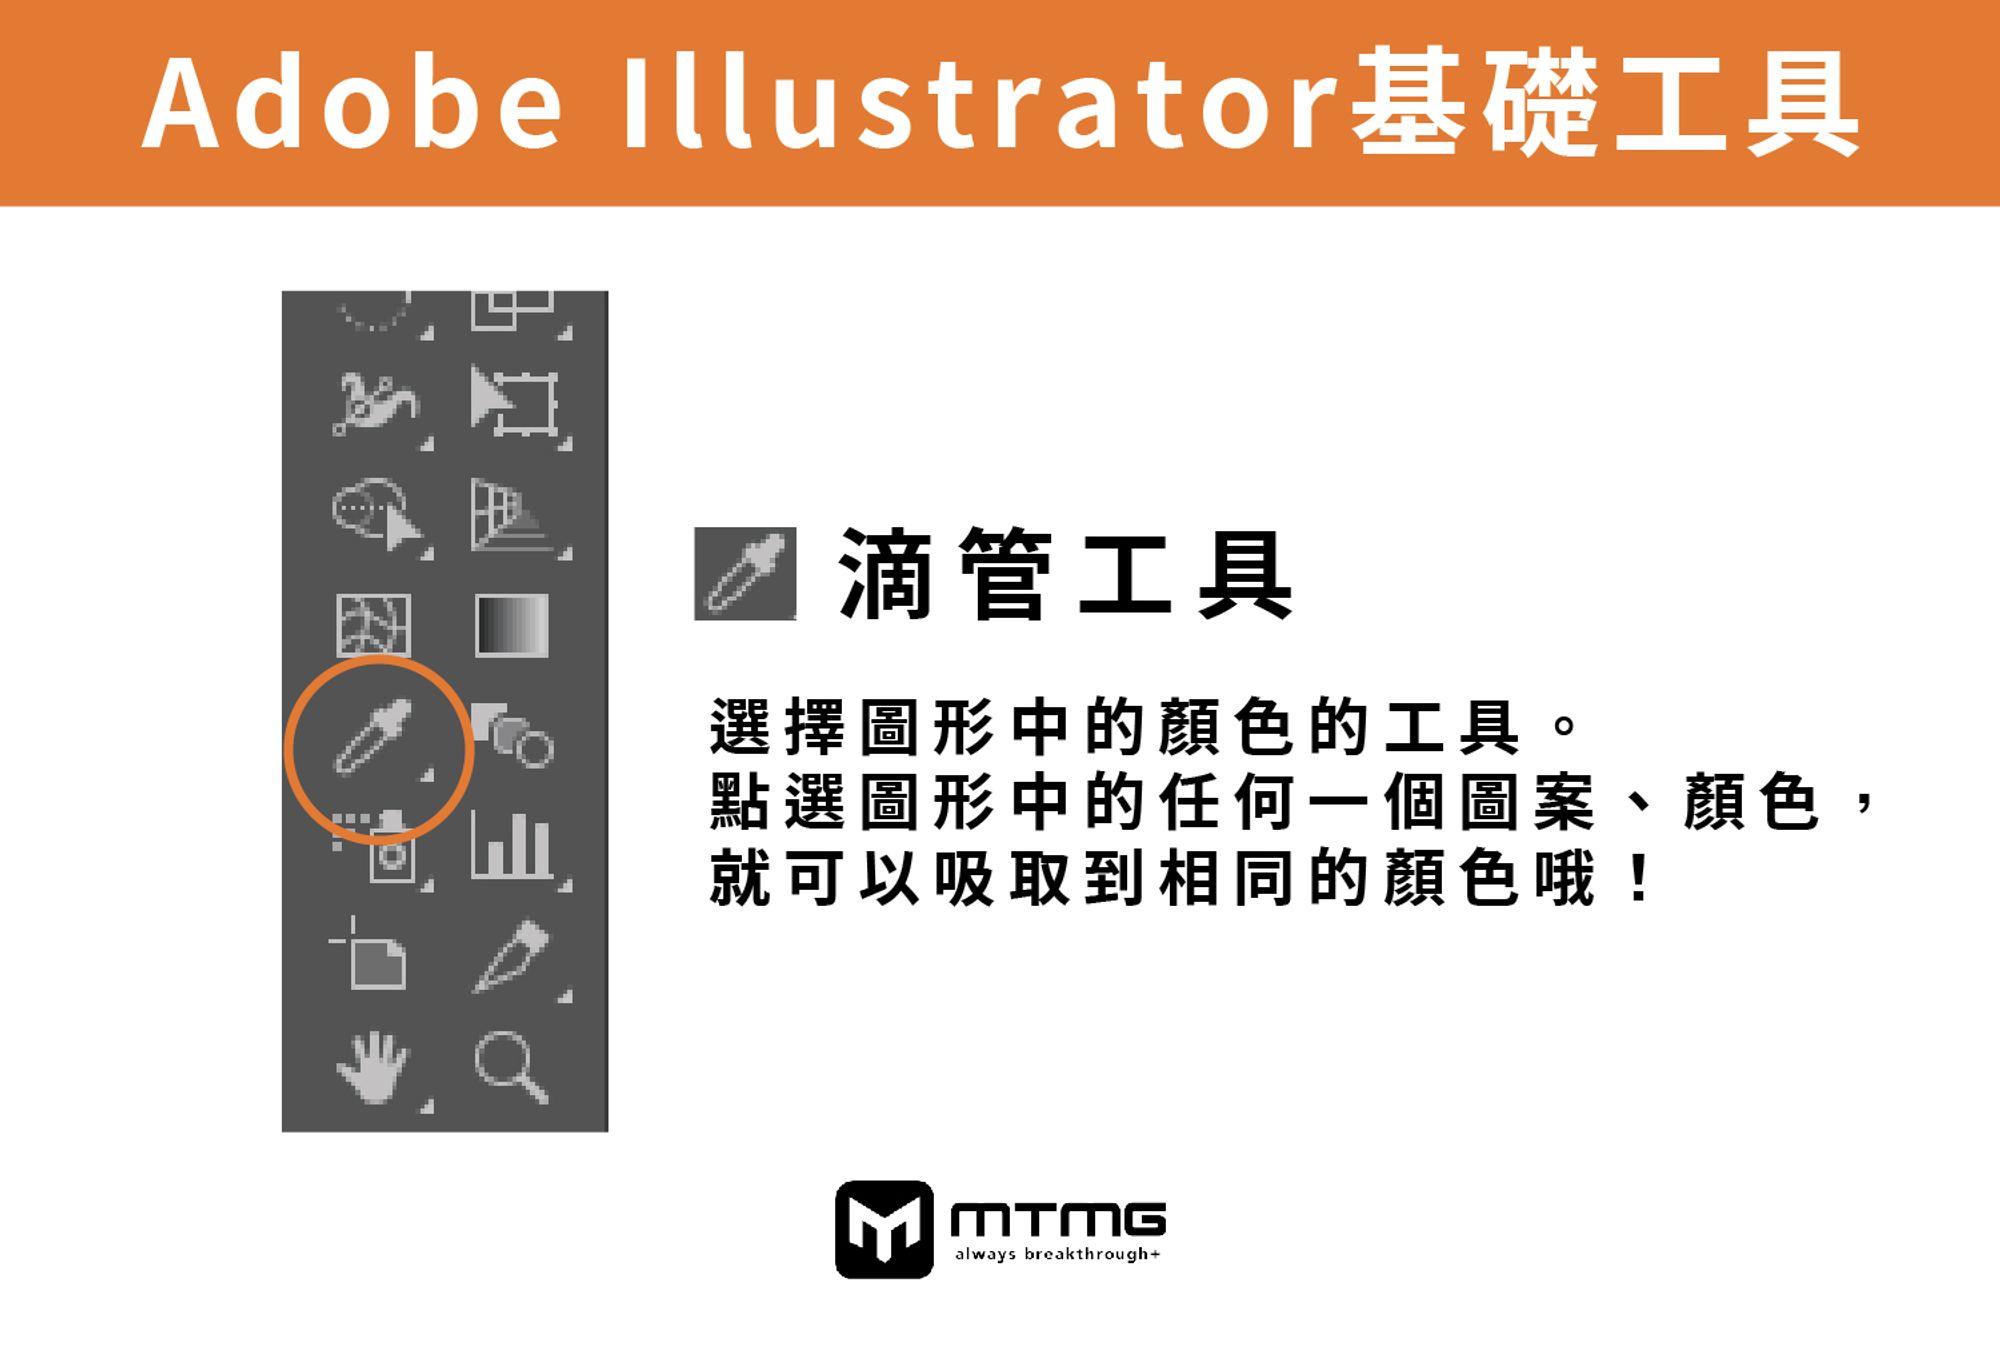 Adobe Illustrator 滴管工具